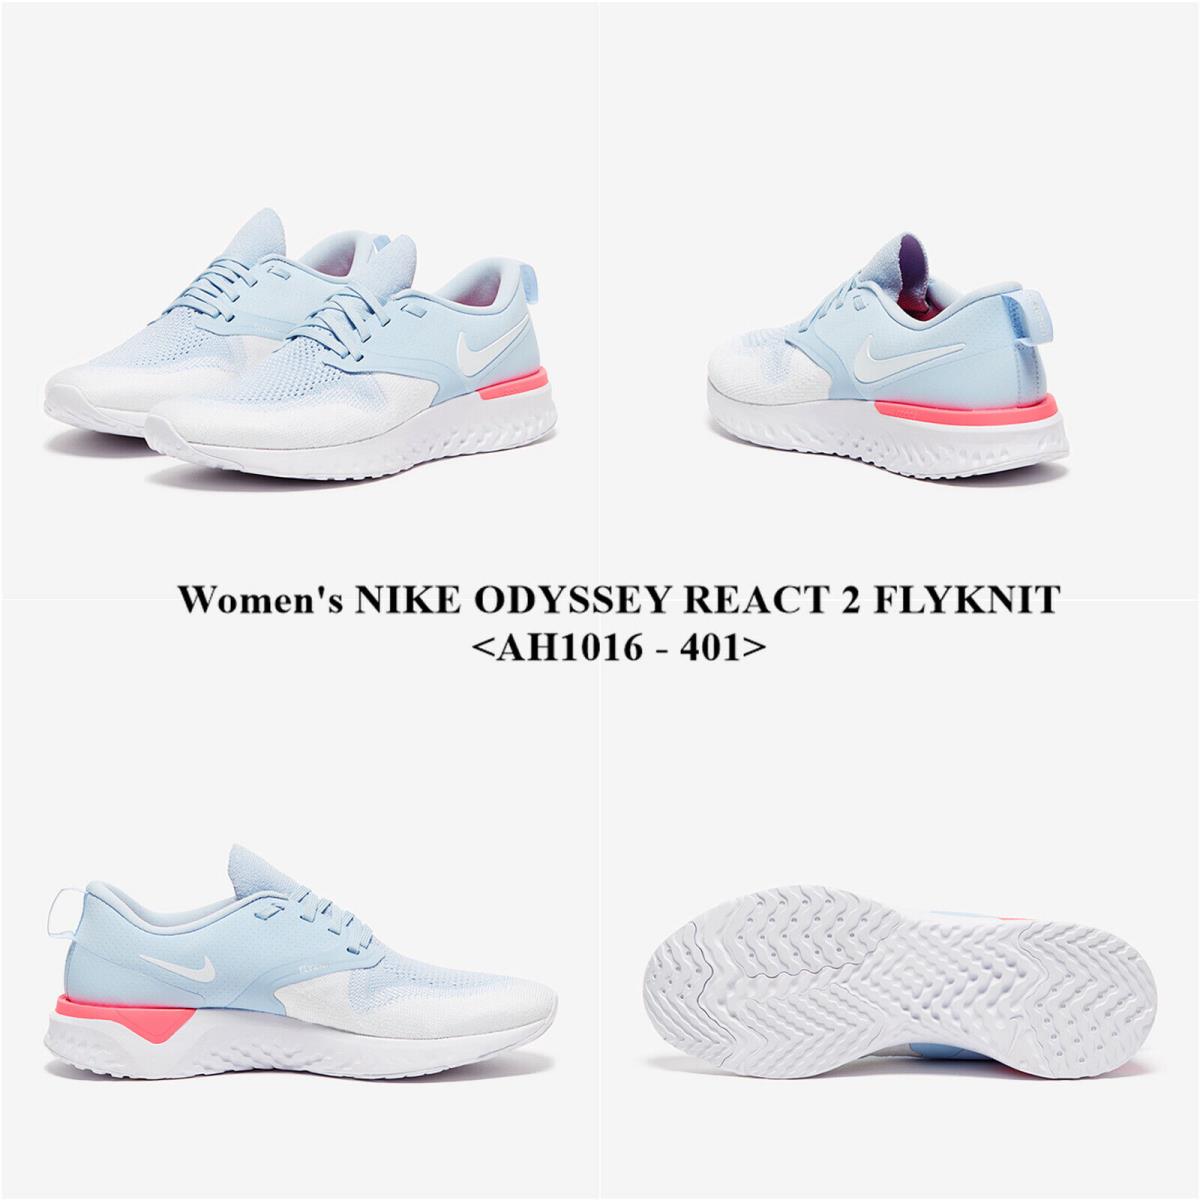 Women`s Nike Odyssey React 2 Flyknit AH1016 - 401 Running/casual Shoes.nwbox - HYDROGEN BLUE / WHITE-HYPER PINK